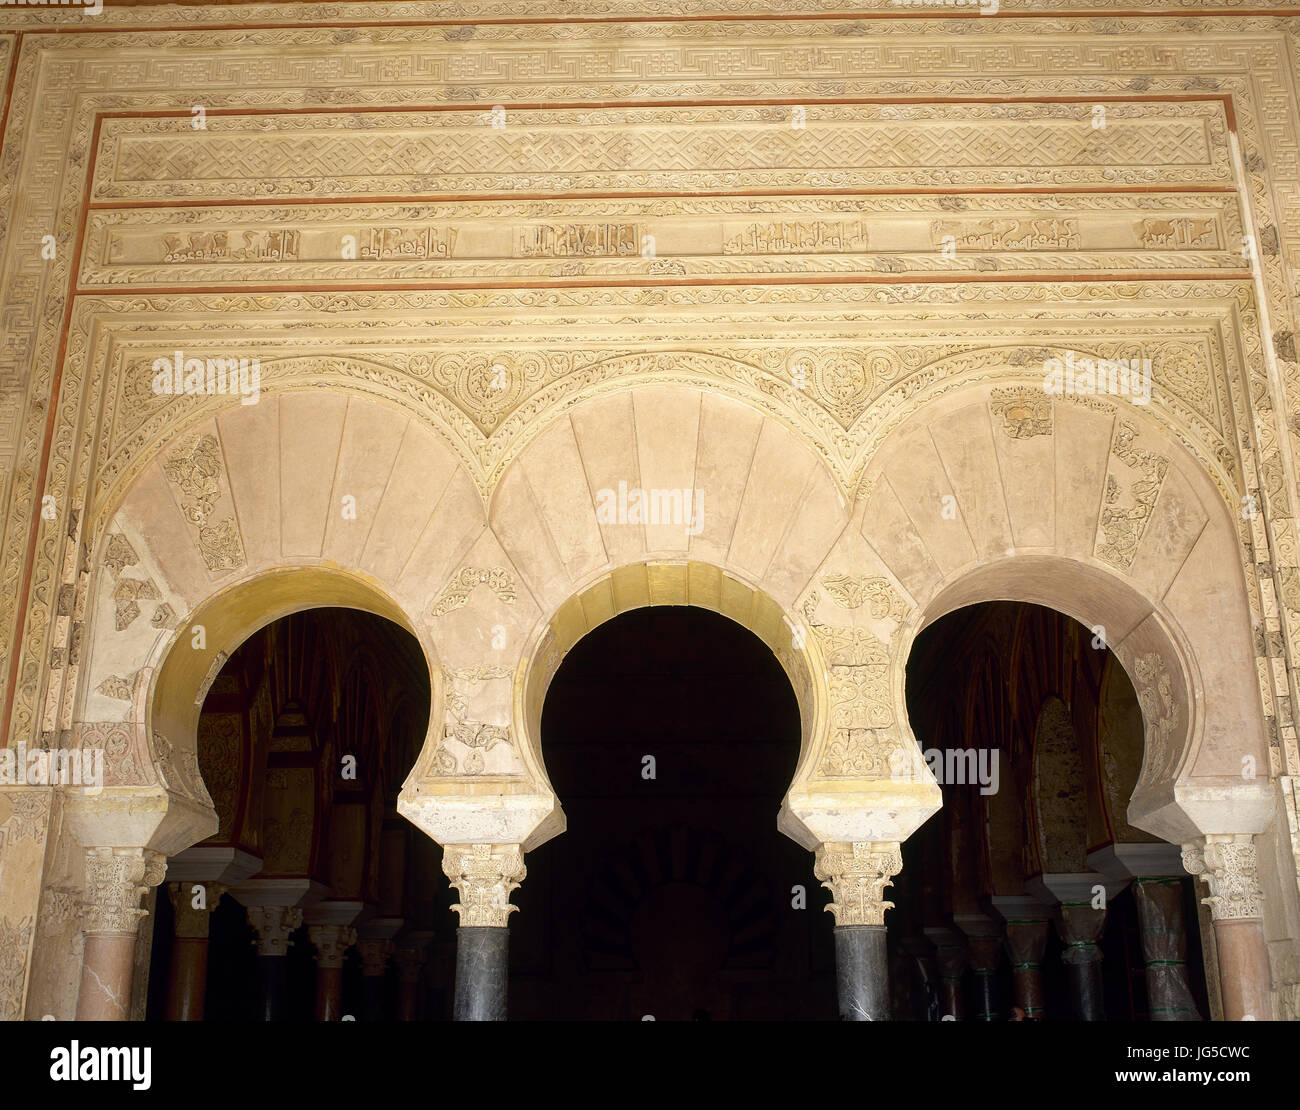 Medina Azahara. Muslim medieval palace-city built by Abd-ar-Rahman II al-Nasir, 10th century. Umayyad Caliph of Cordoba, Spain. Detail moorish arch of Reception Hall of Abd ar-Rahman III. Stock Photo